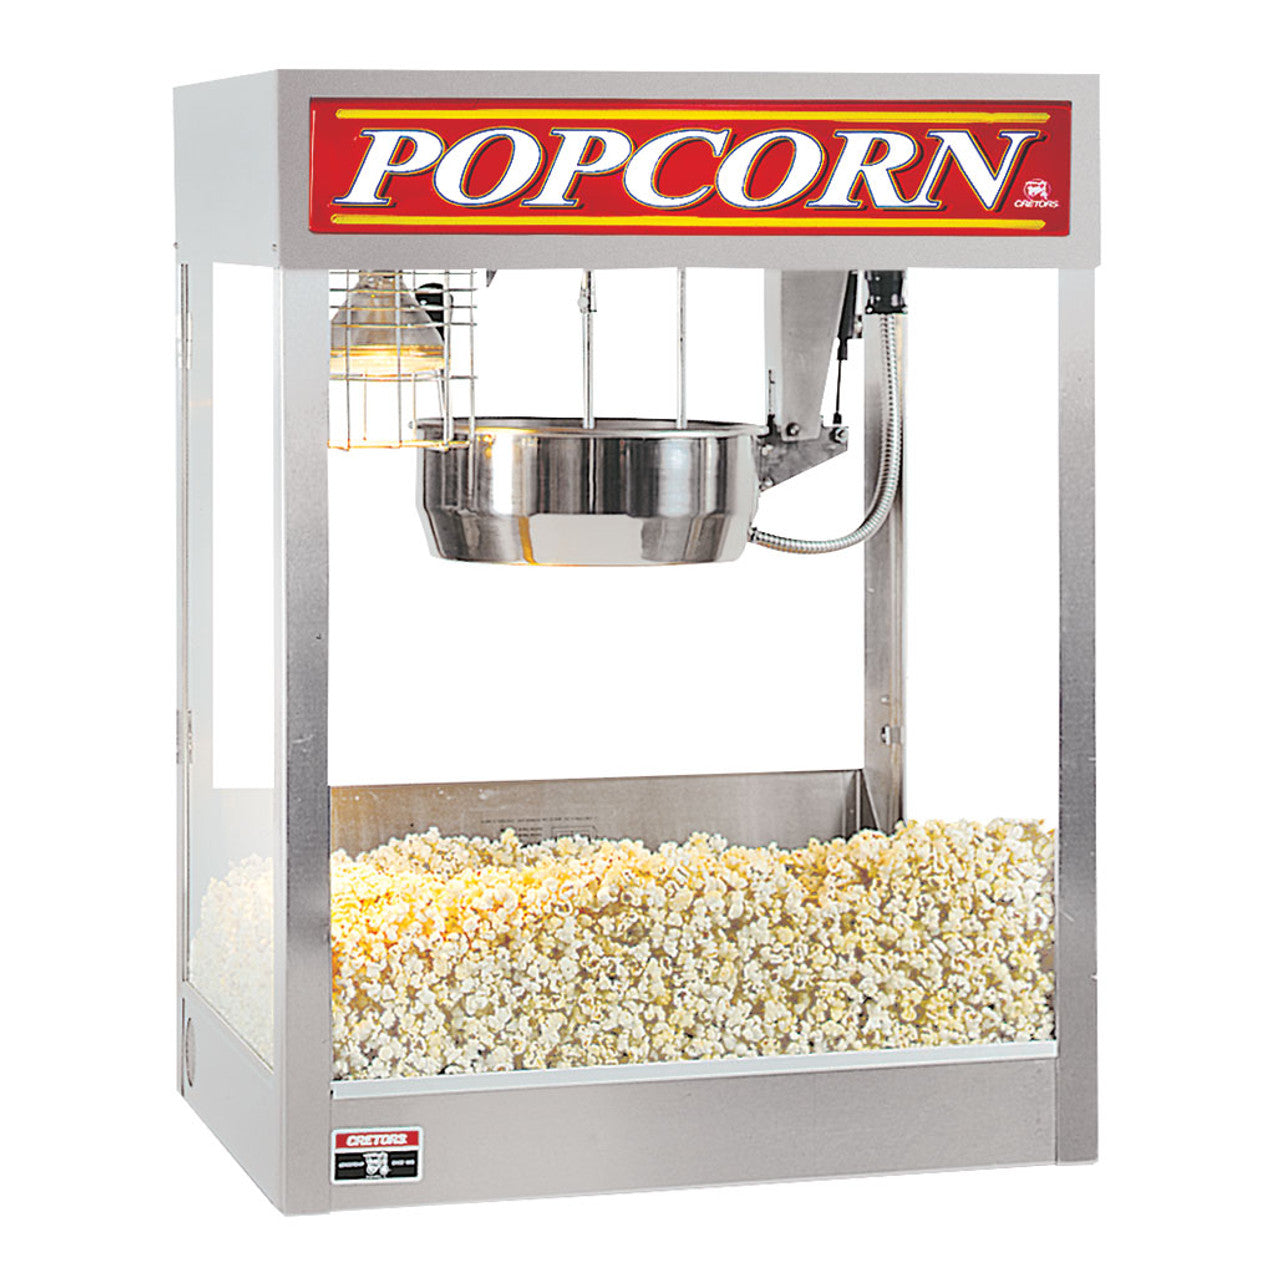 Cretors Popcorn Machine 16 oz. Merchant Counter Model Popper, not shown on counter